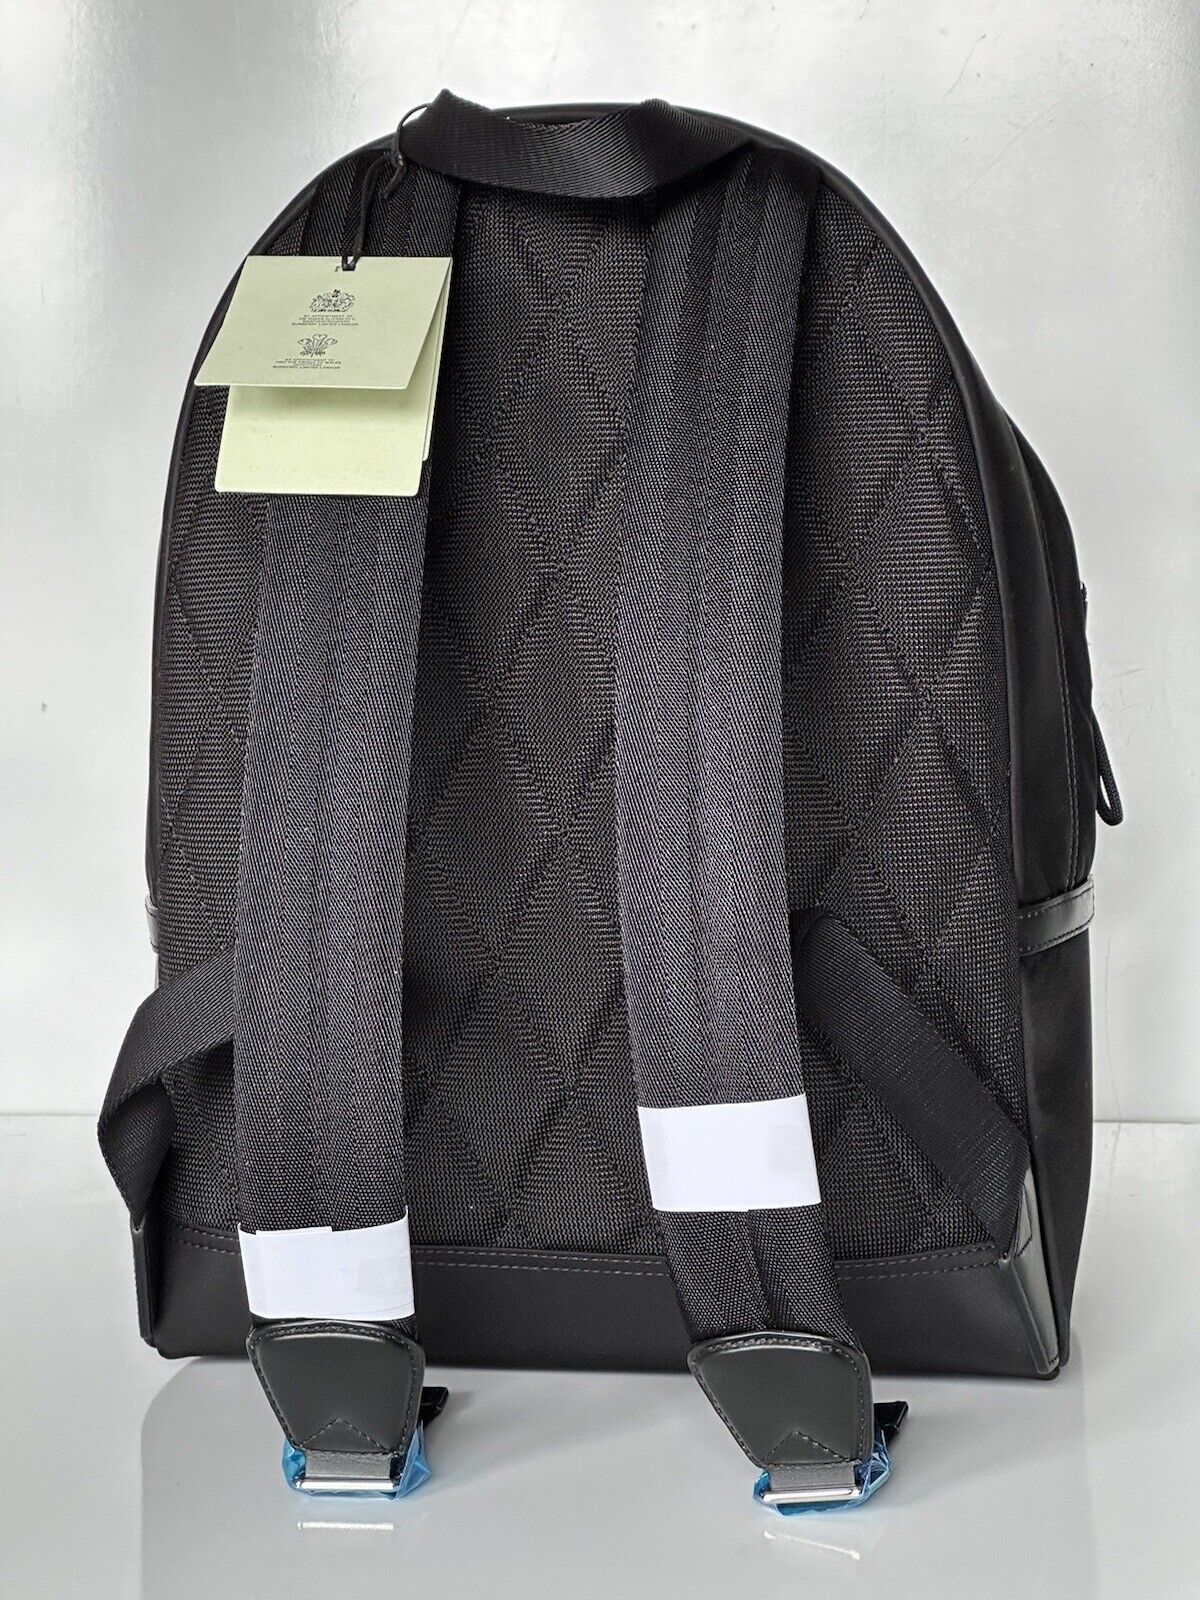 NWT $1250 Burberry Abbeydale Nylon Backpack Black 80653101